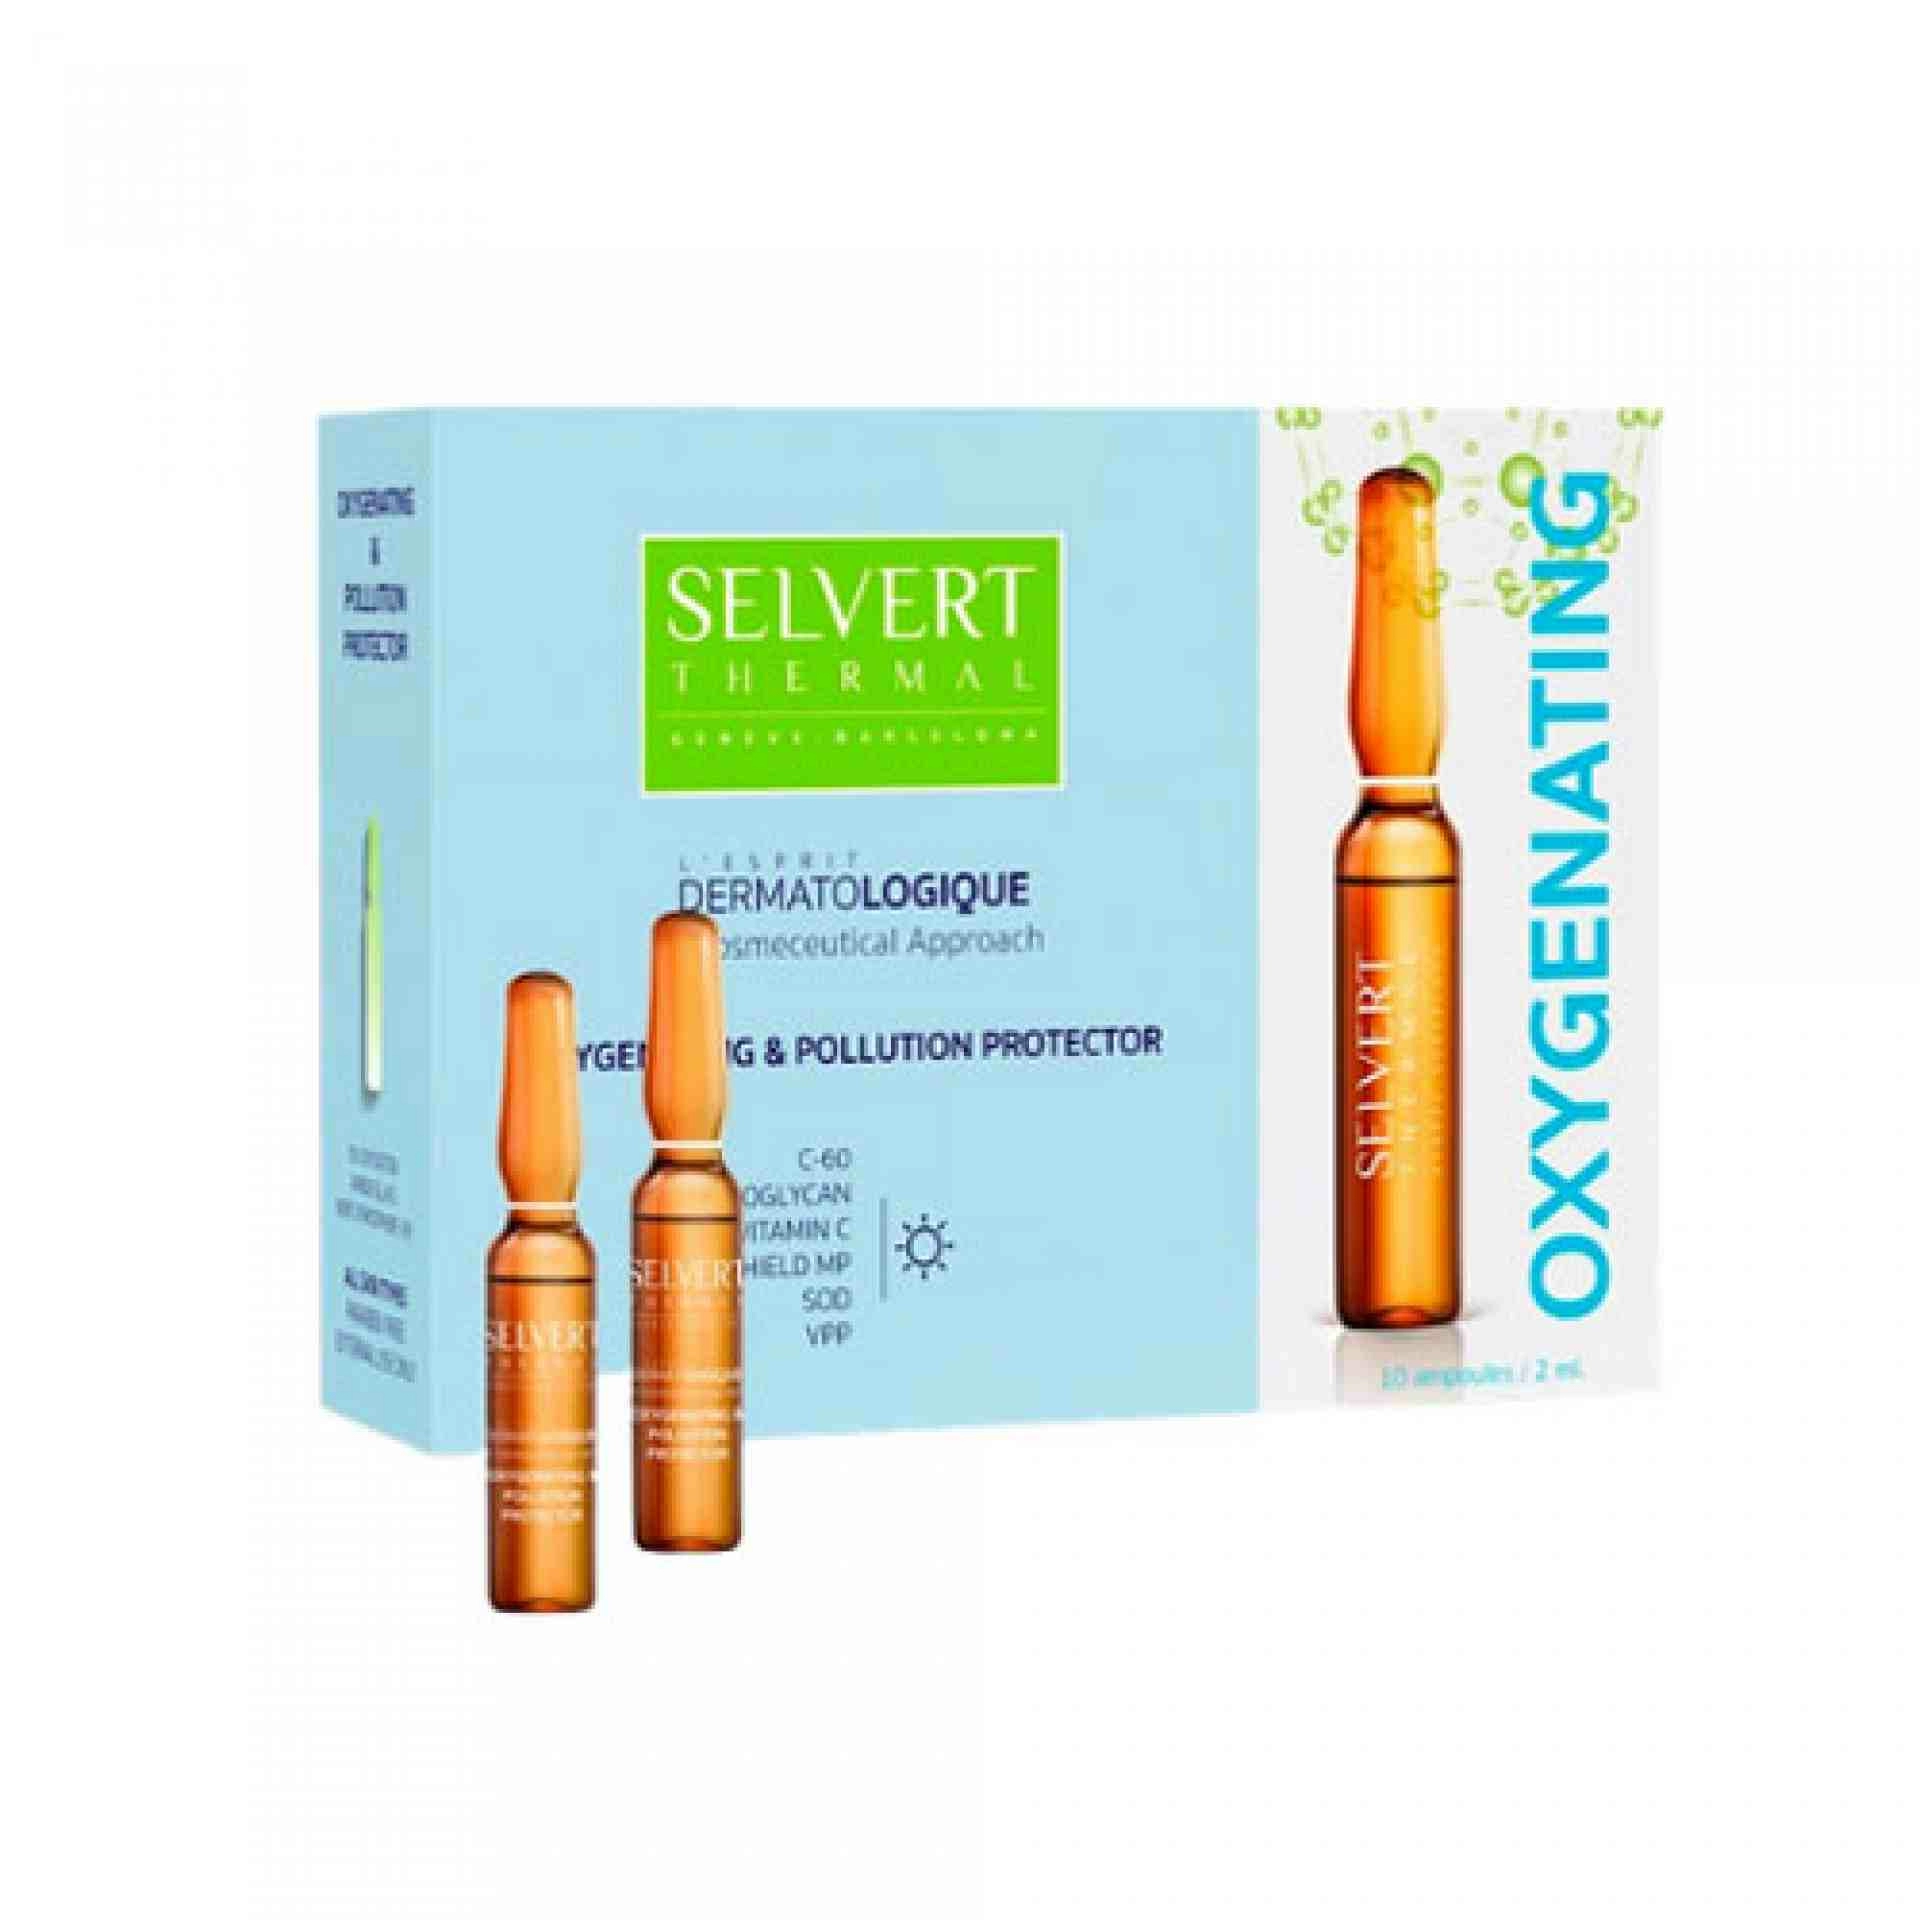 Oxygenating & Pollution Protector | Ampollas 10x2ml - L´Esprit Dermatologique - Selvert Thermal ®